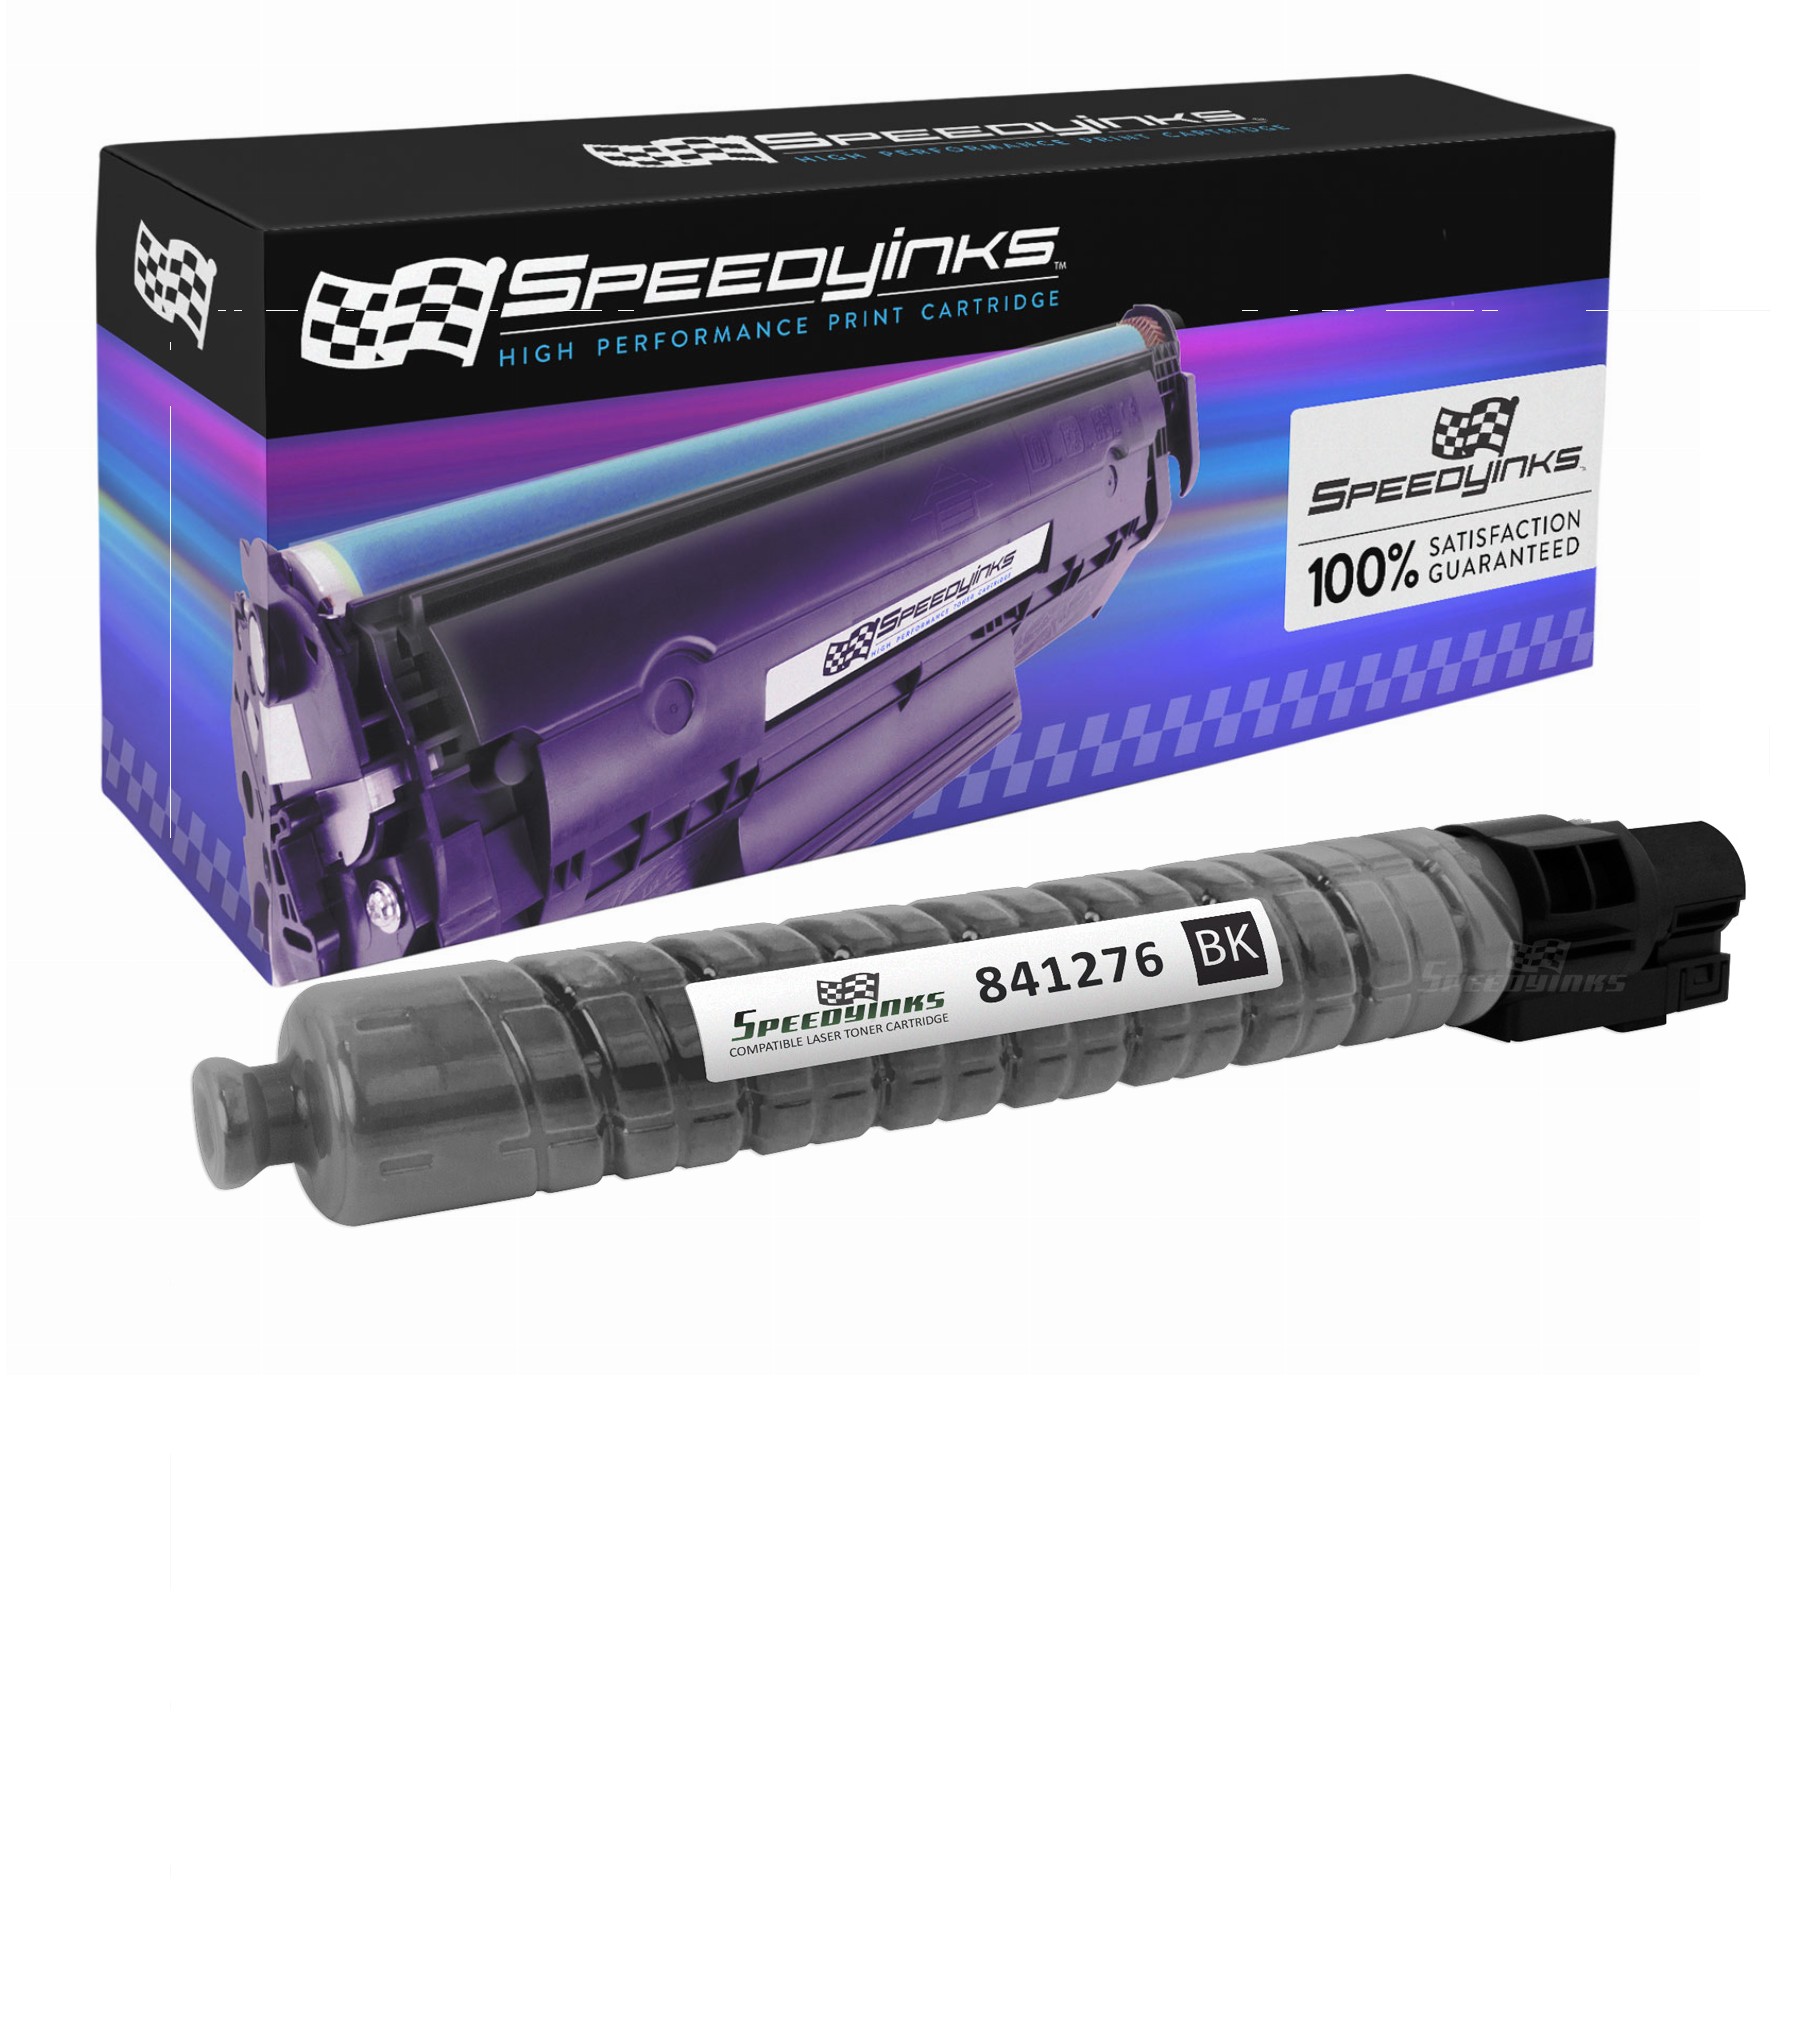 Ricoh Compatible 841276 Black Laser Toner Cartridge for use in Ricoh Aficio MP C2800, Ricoh Aficio MP C3300, Ricoh Aficio MP C2800SPF, Ricoh Aficio MP C3300SPF, Gestetner MPC2800 - image 1 of 5